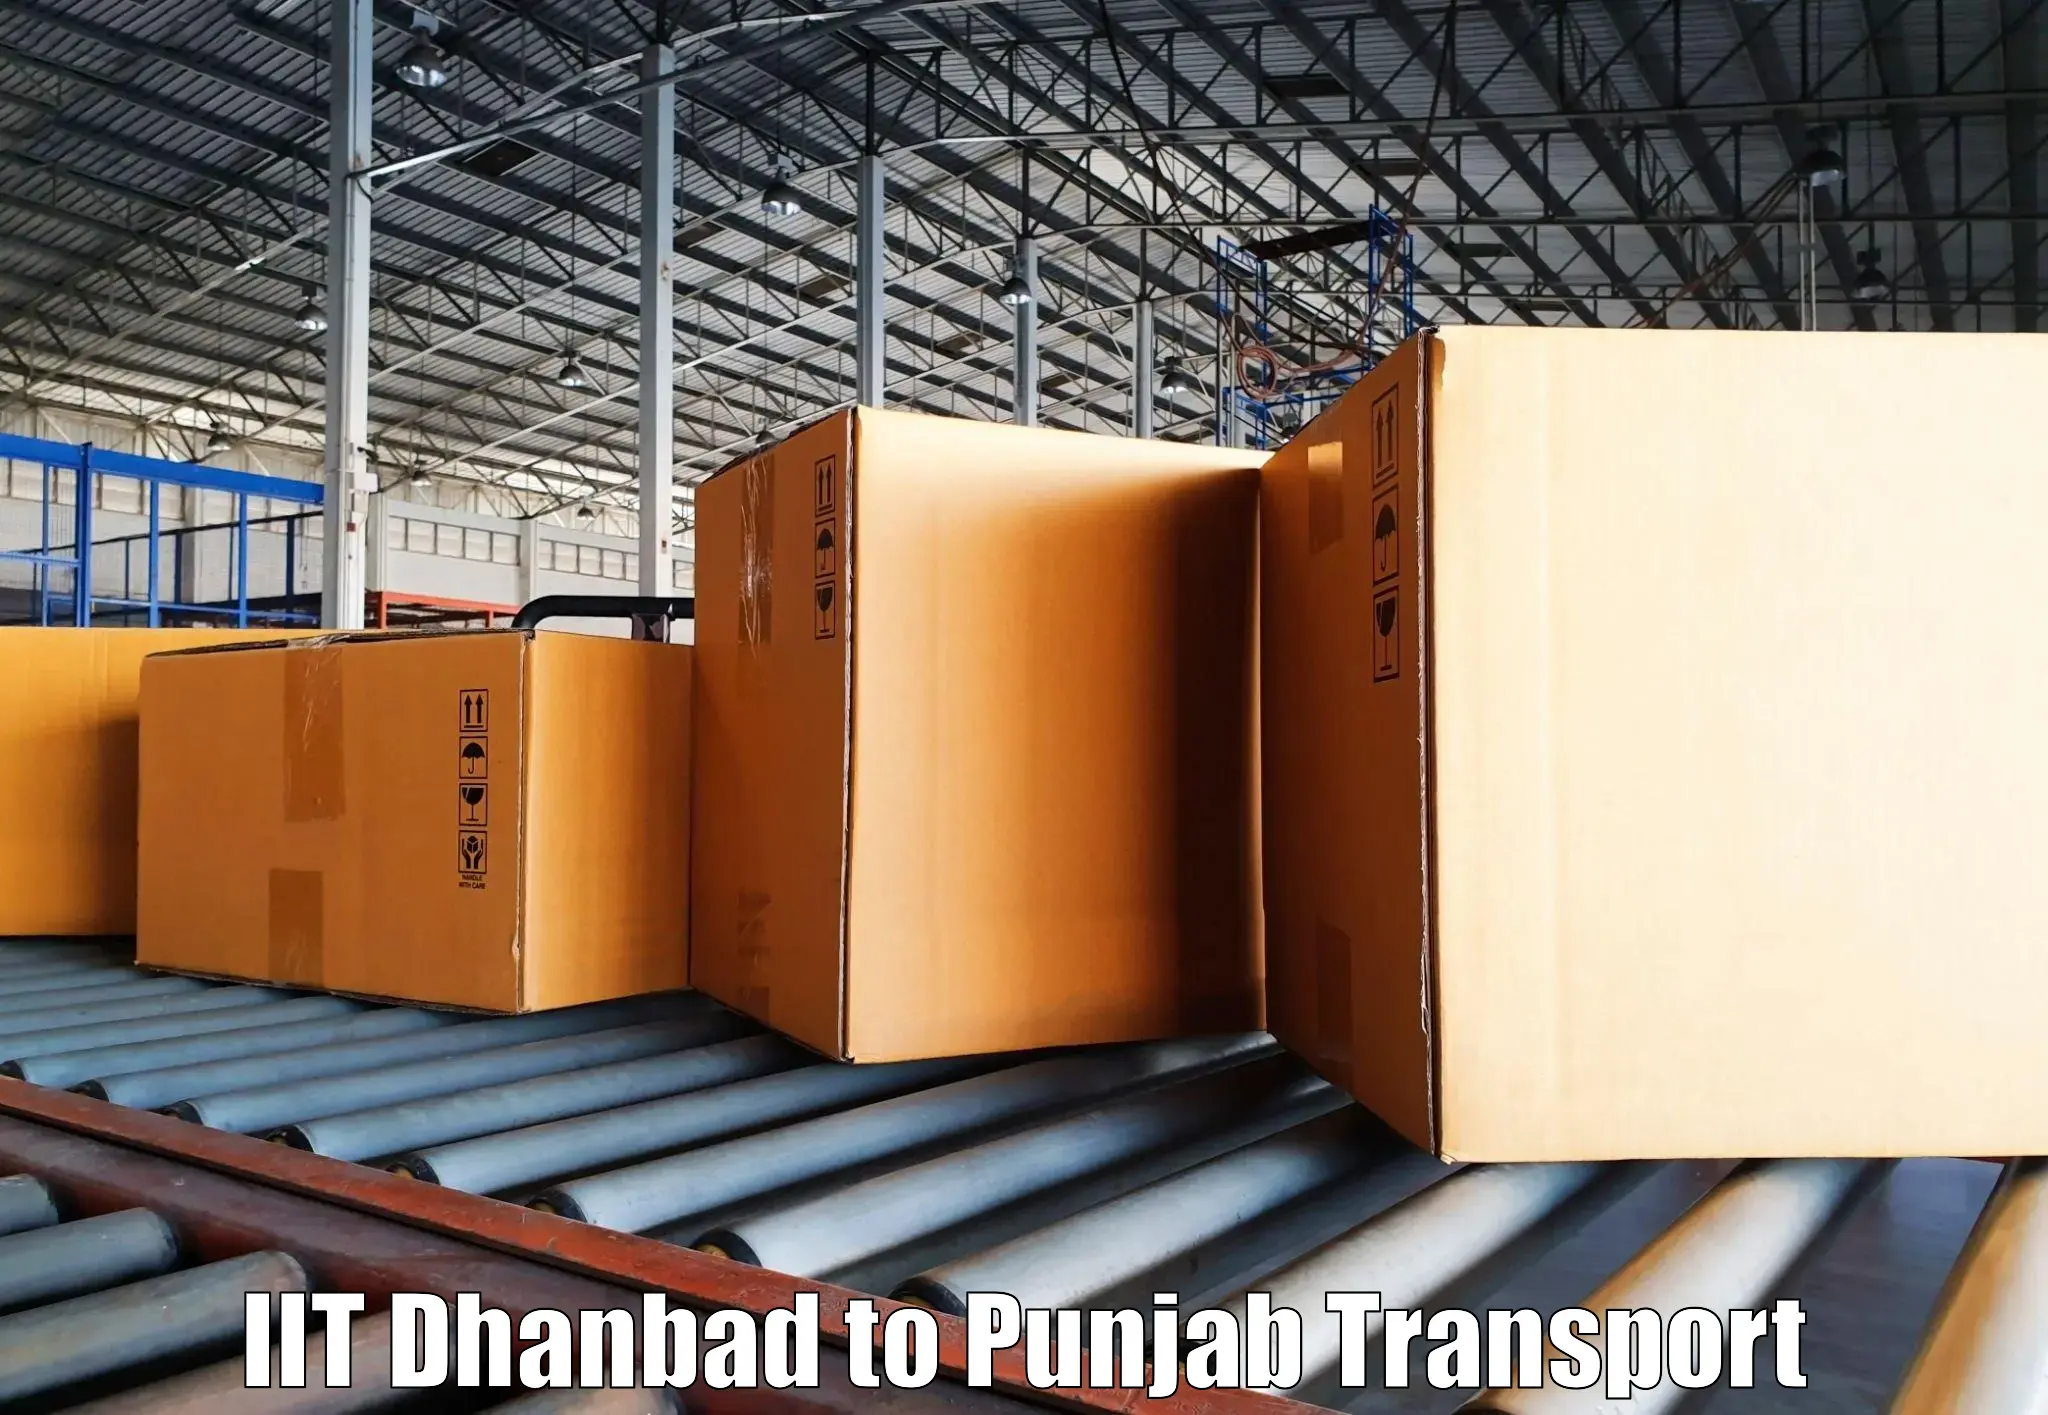 Delivery service IIT Dhanbad to Barnala